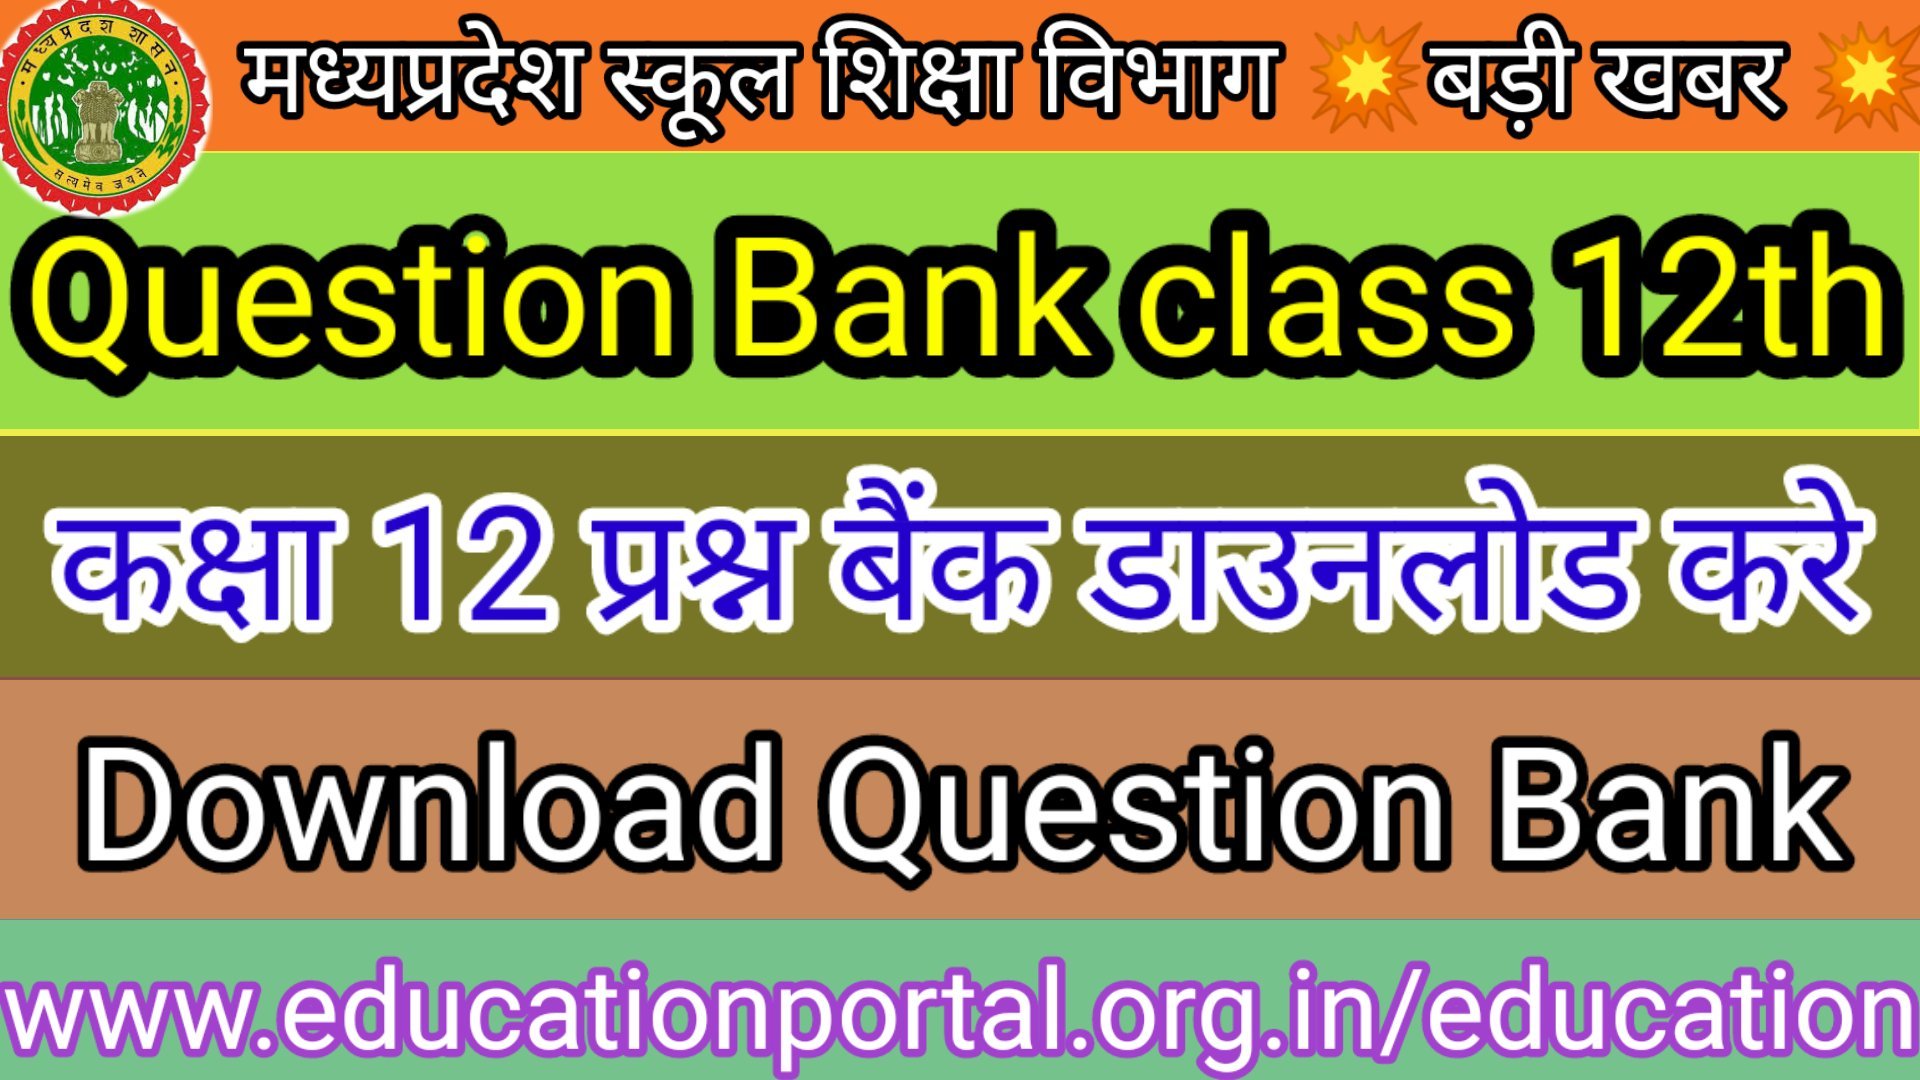 Question Bank class 12th MP board 2021 Biology chemistry physics English प्रश्न बैंक कक्षा 12th डाउनलोड पीडीएफ फाइल